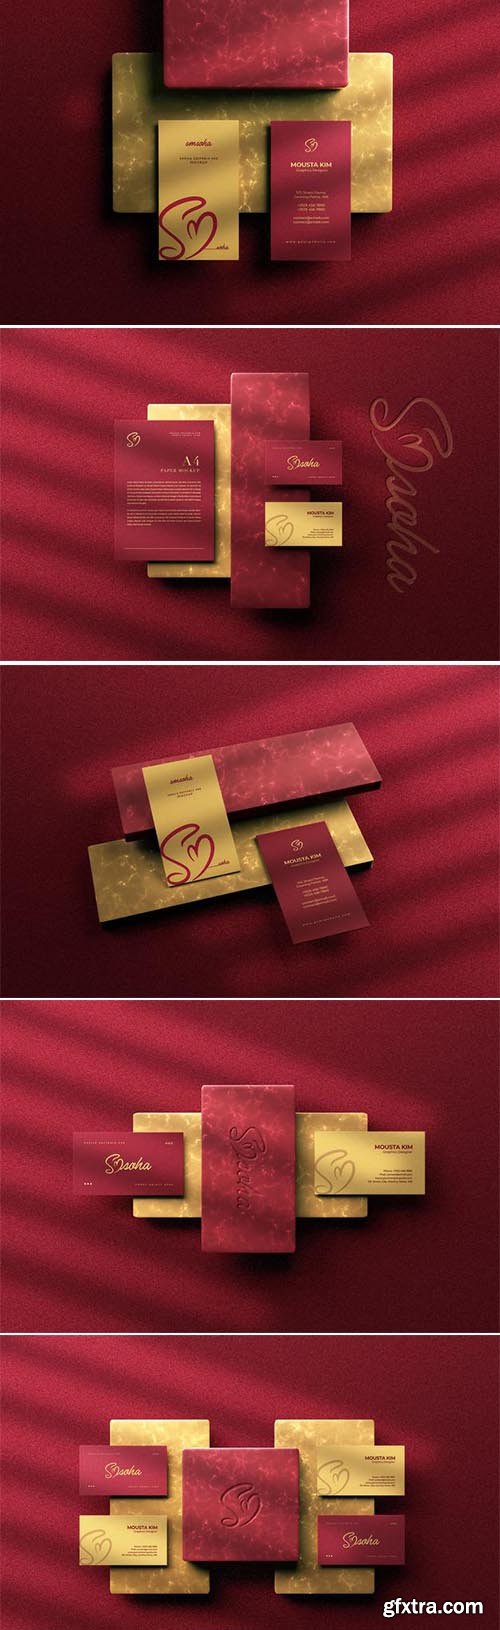 Elegant business card with paper mockup